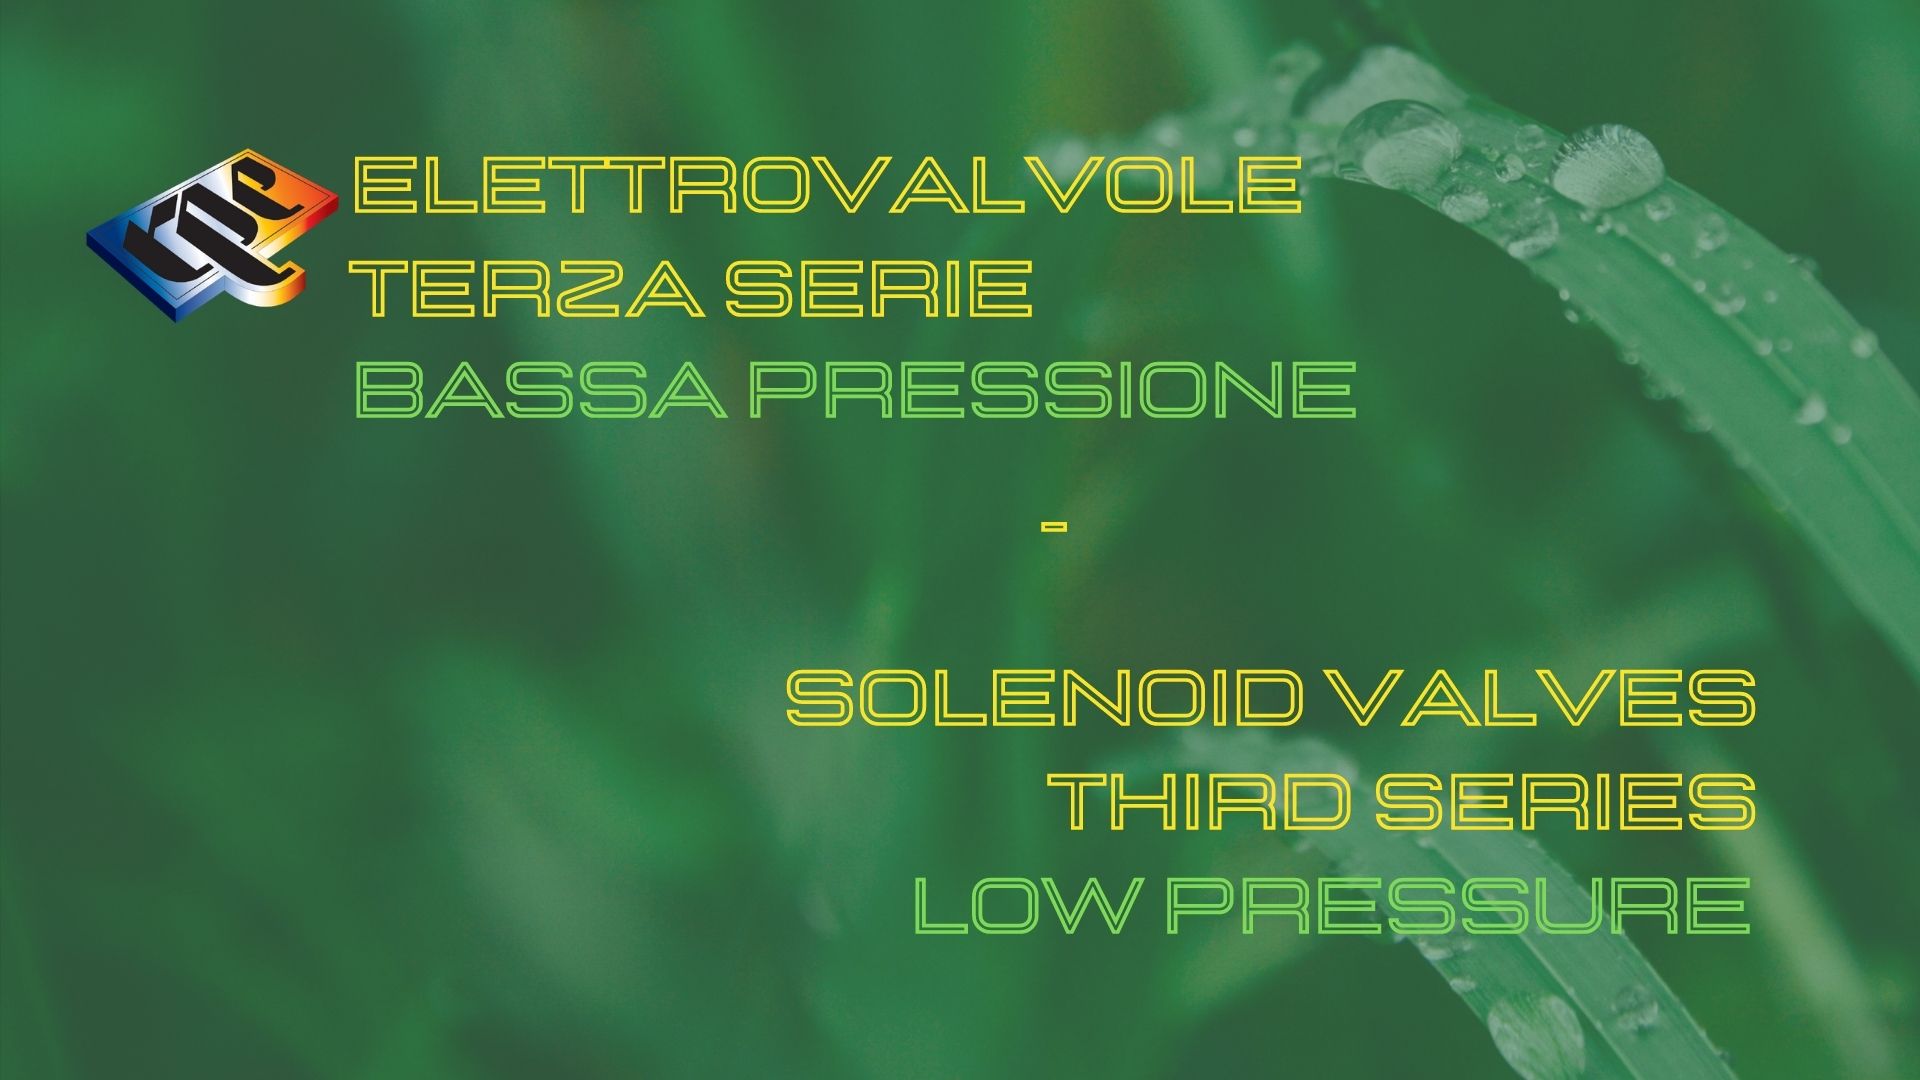 Third Series - Low Pressure Irrigation solenoid valve 